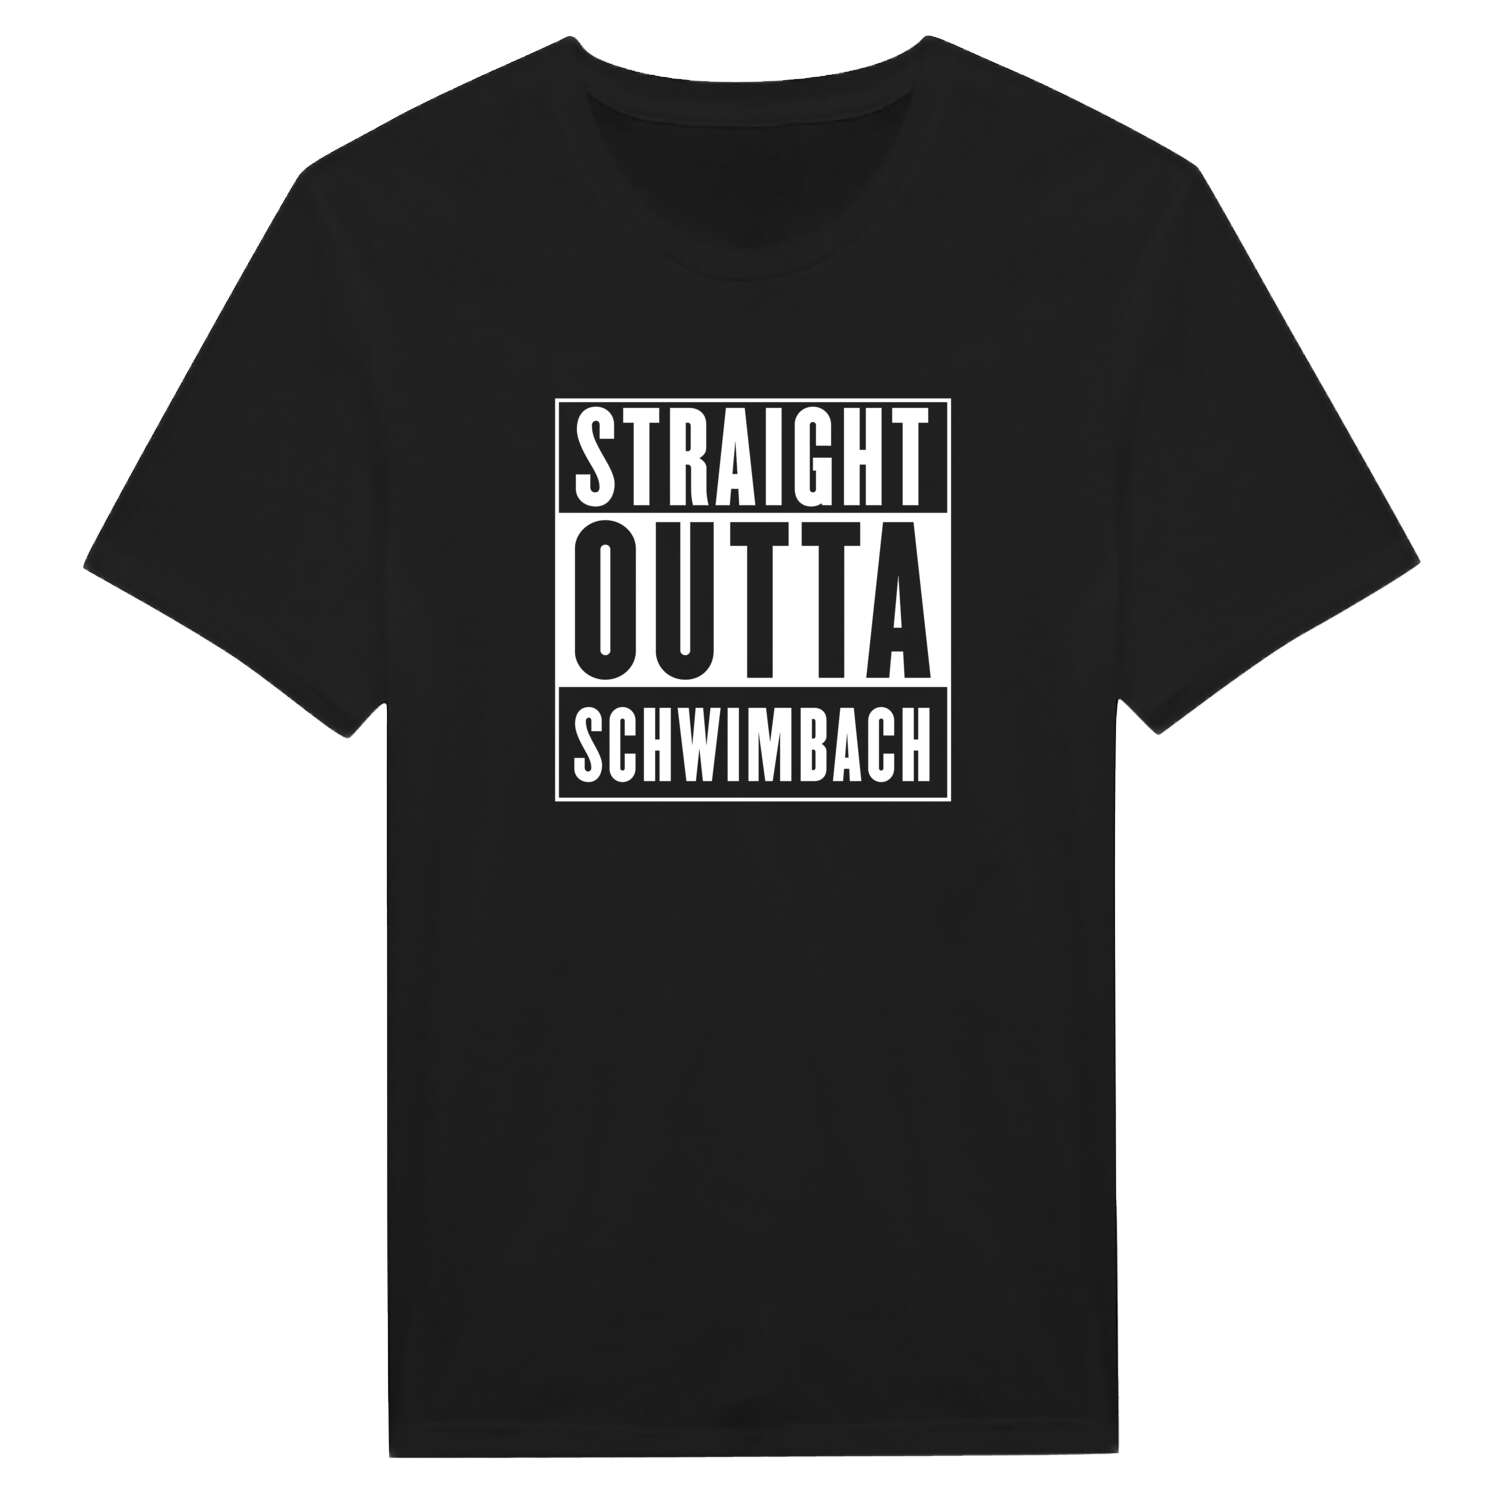 Schwimbach T-Shirt »Straight Outta«